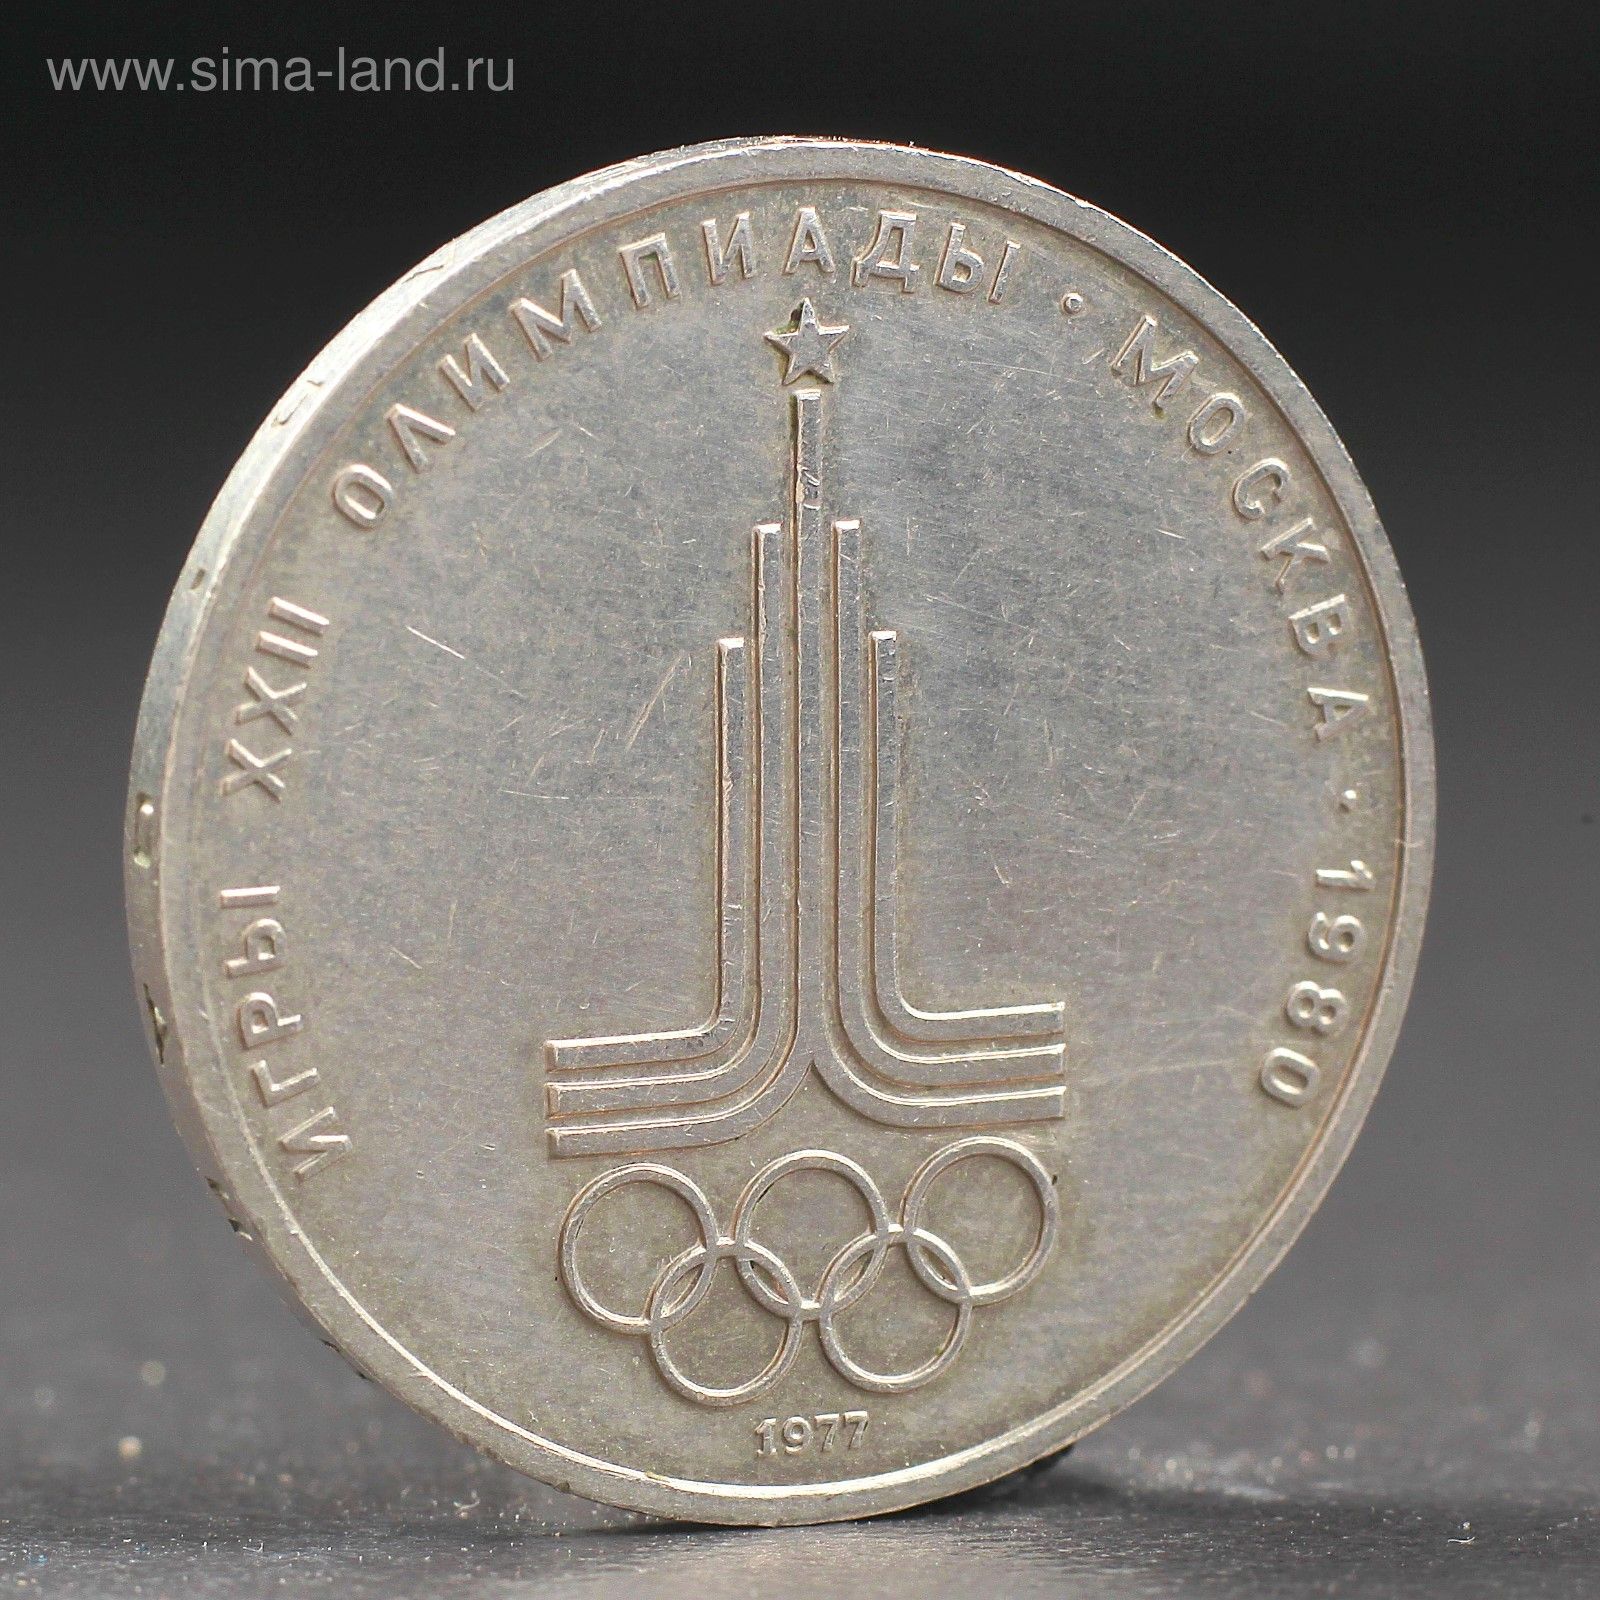 1 рубль в 80 е. Монета СССР 1 рубль 1980 года Олимпийский. Монета 1 рубль 1977 года. Олимпийский рубль 1977.